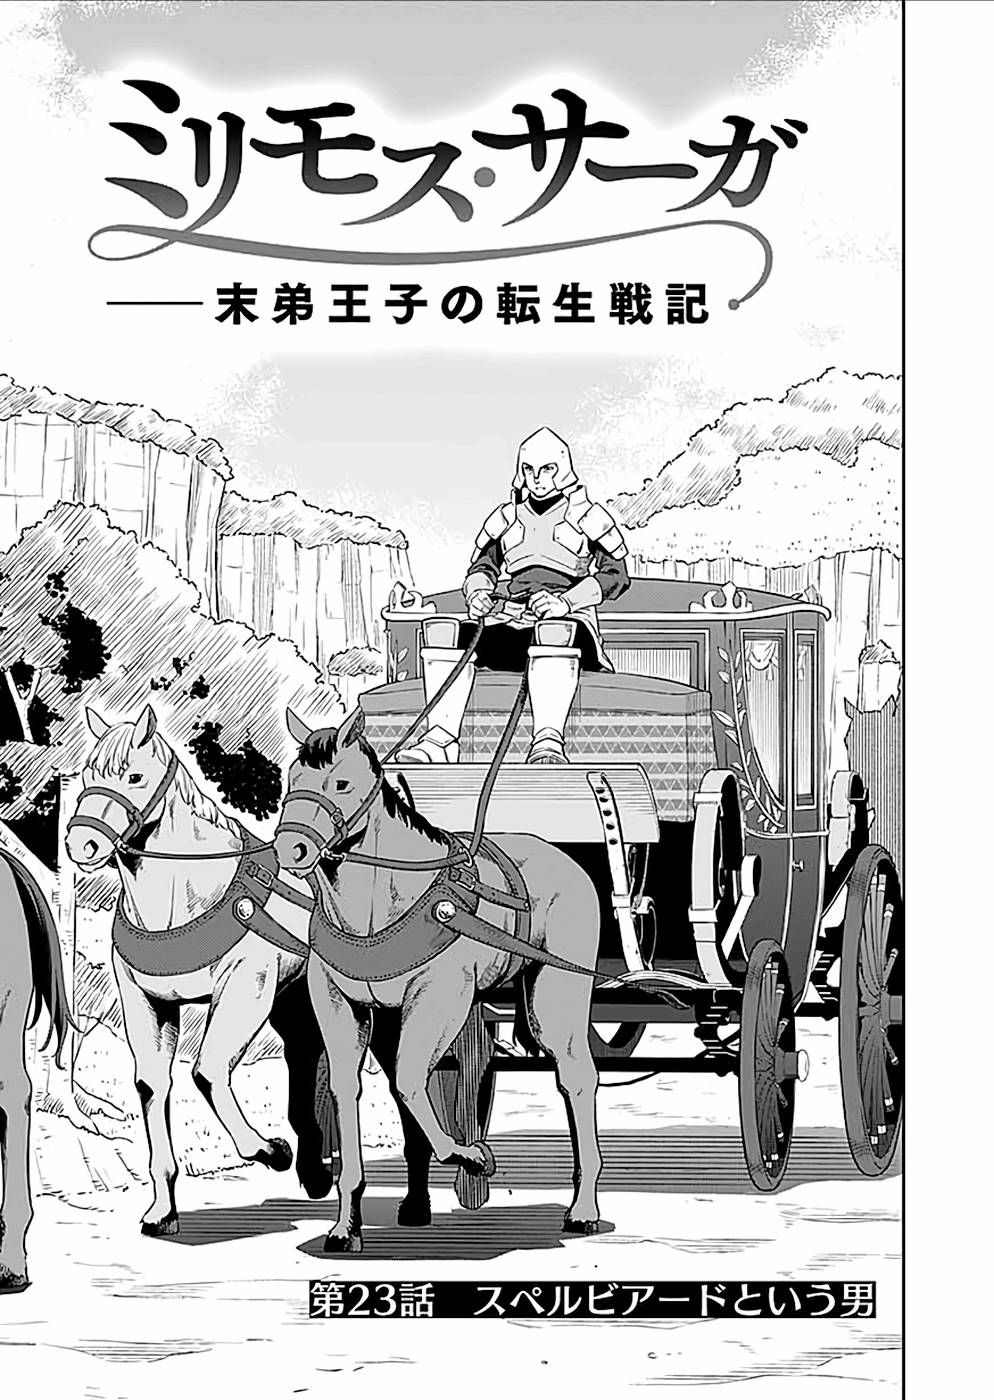 Millimos Saga: Battei Ouji no Tensei Senki - Chapter 23 - Page 1